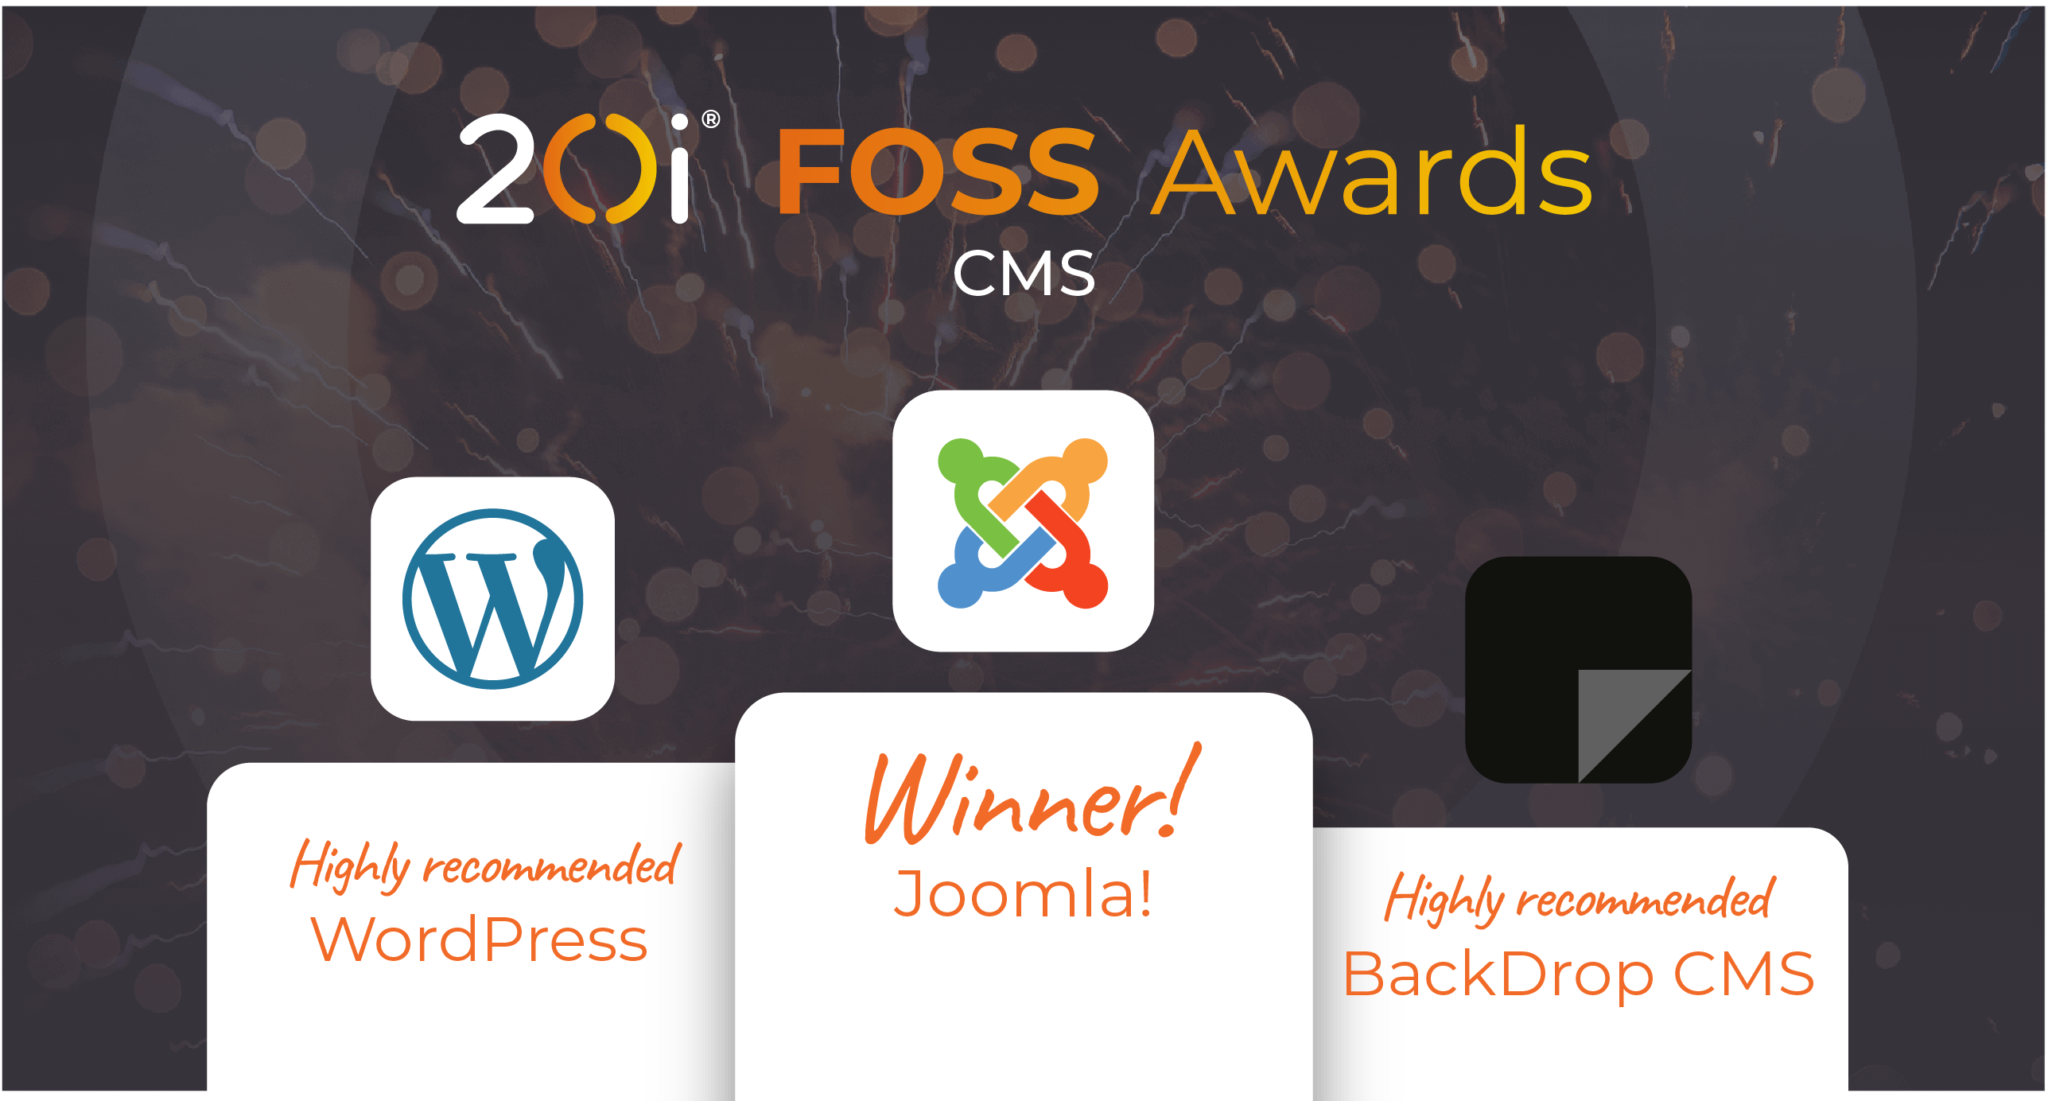 20i foss awards winners 2023 - cms category